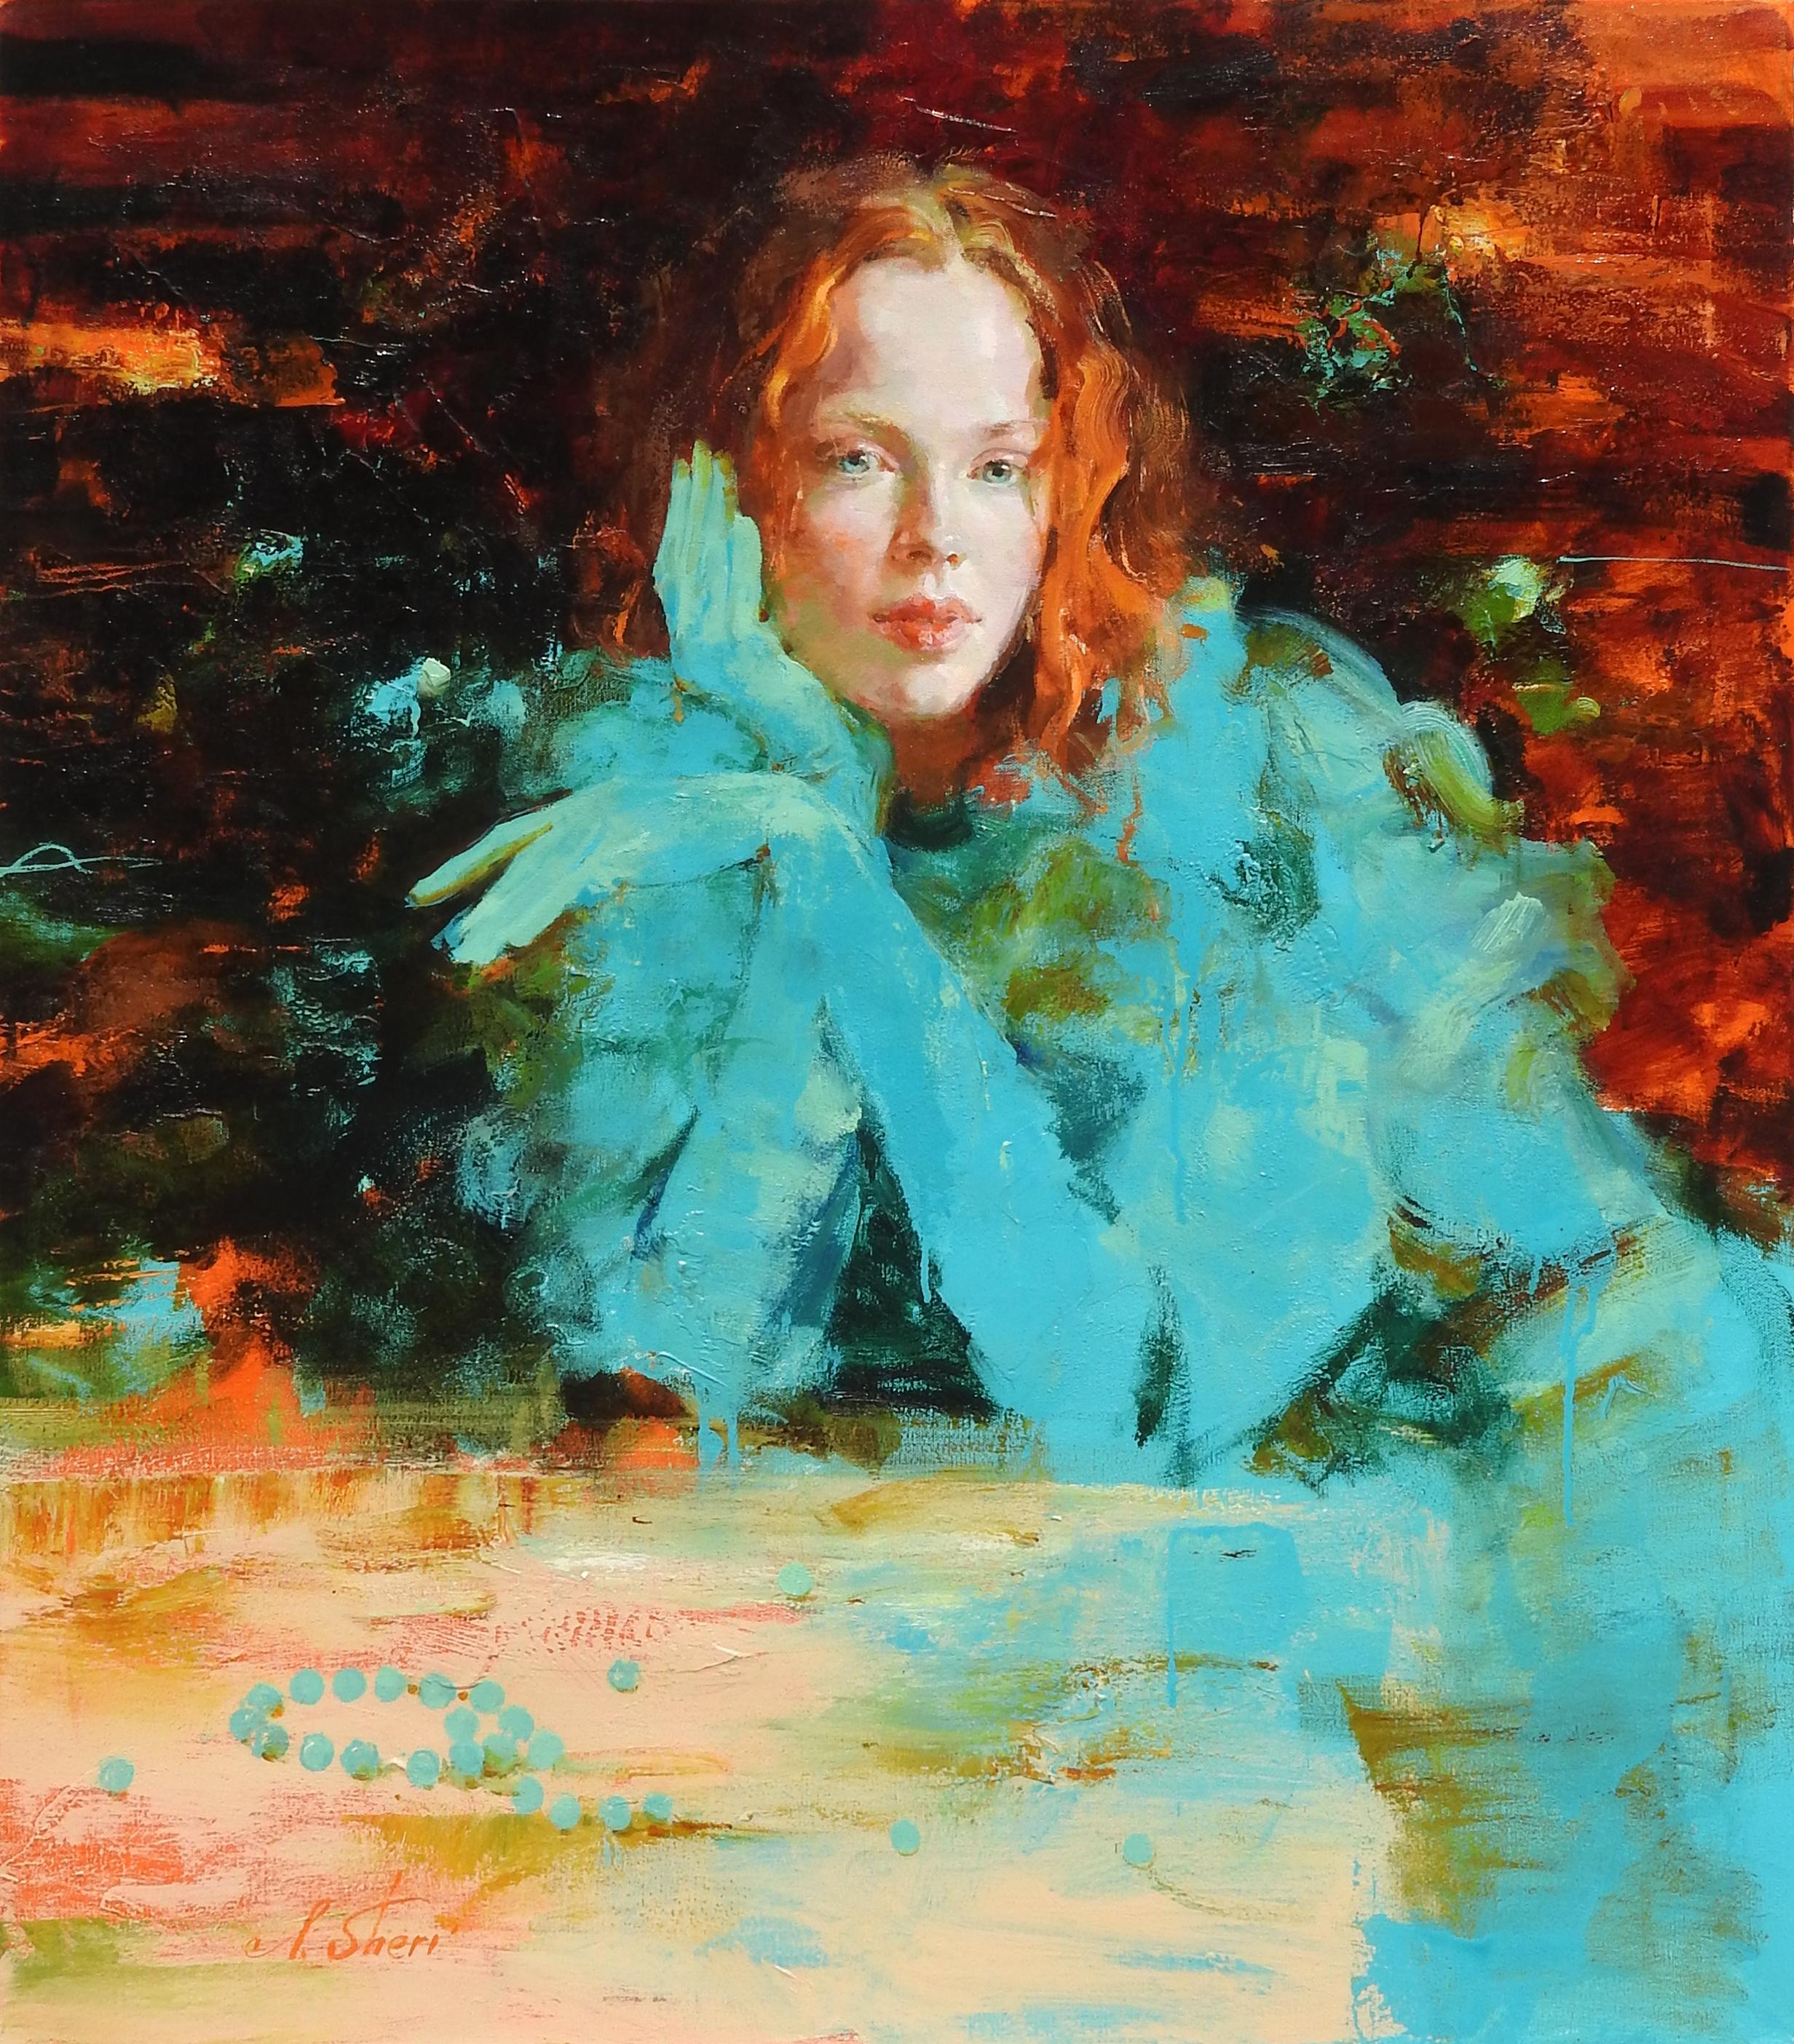 "Amber & Turquoise", Irene Sheri, Figurative, Impressionism, Original, 34x30